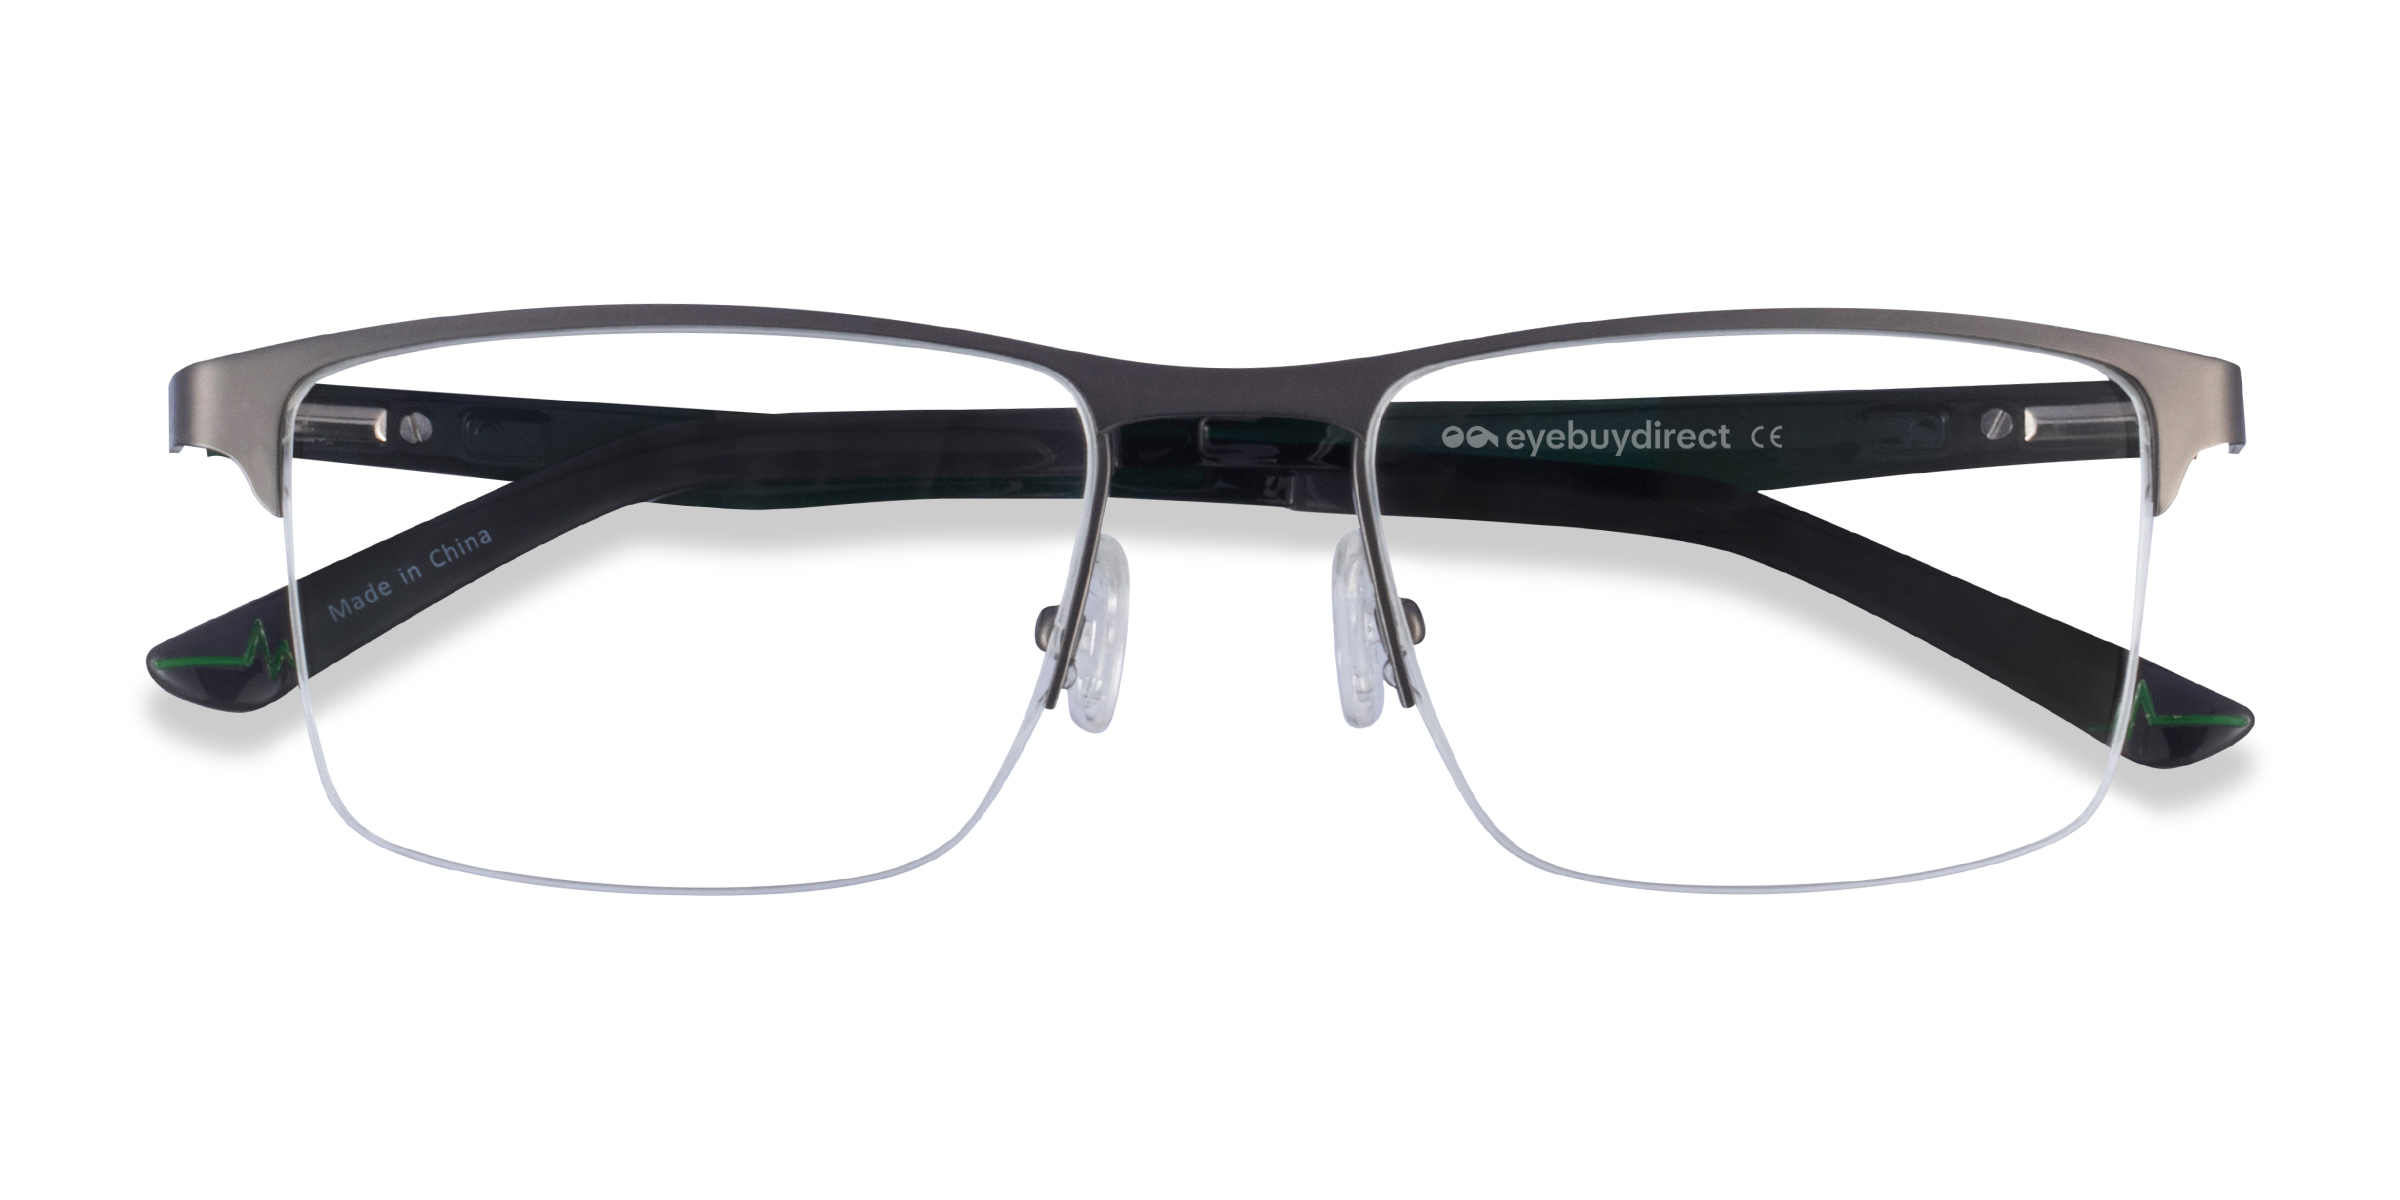 Half-Rim Glasses - Semi-Rimless Styles for Men & Women | Eyebuydirect